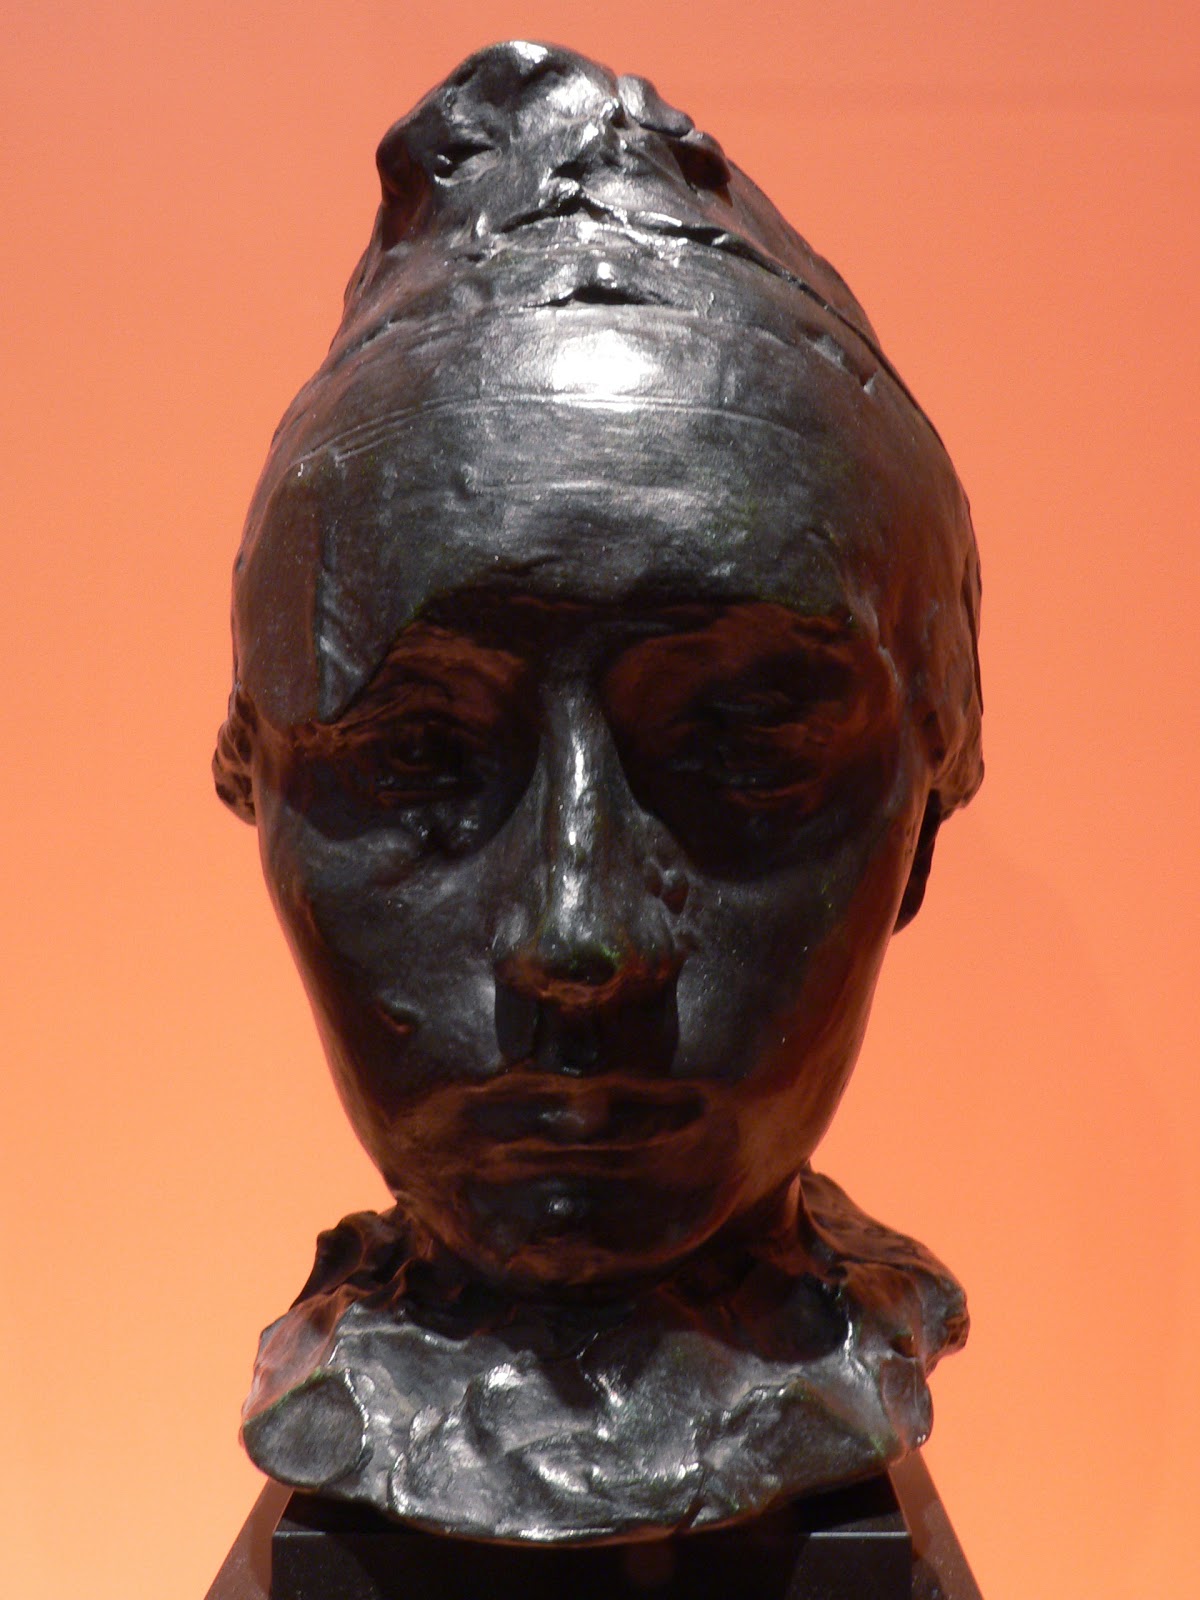 http://upload.wikimedia.org/wikipedia/commons/1/12/Rodin_p1070087.jpg